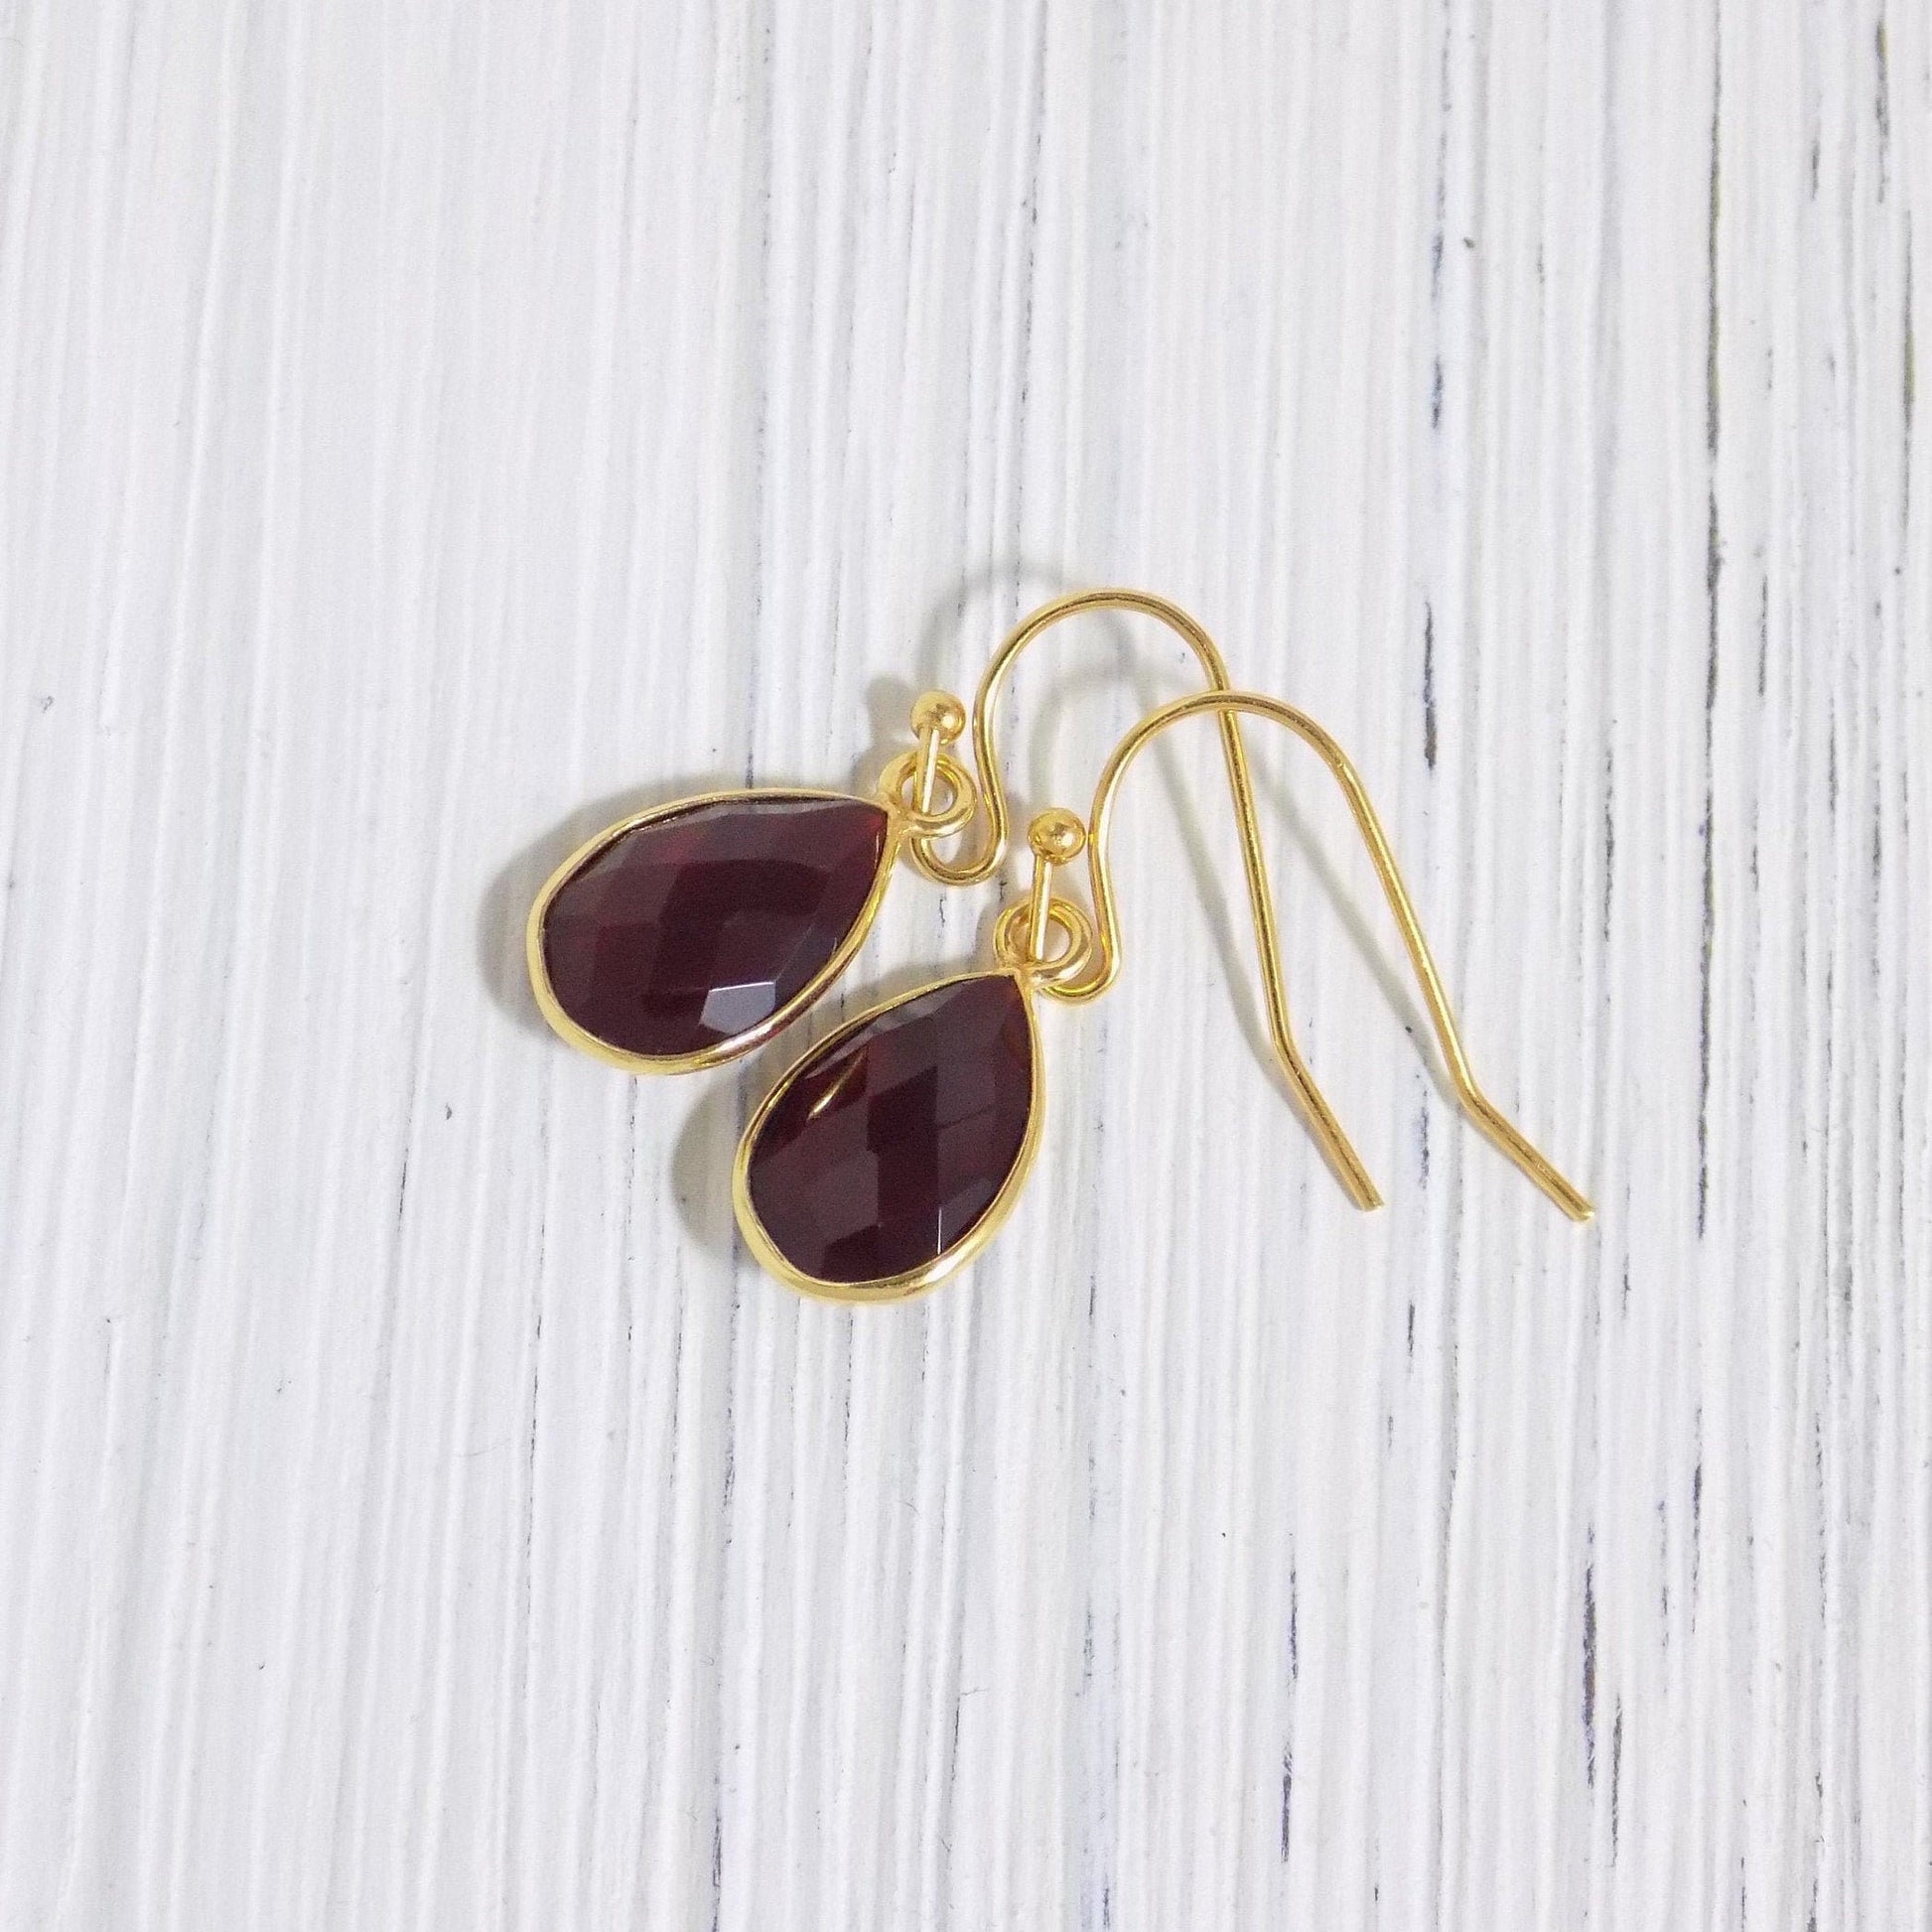 Small Garnet Earrings Gold, Dark Red Stone Drop Earring Burgundy, Teardrop Faceted Crystal Dangle, Bridesmaid Gifts, M4-42